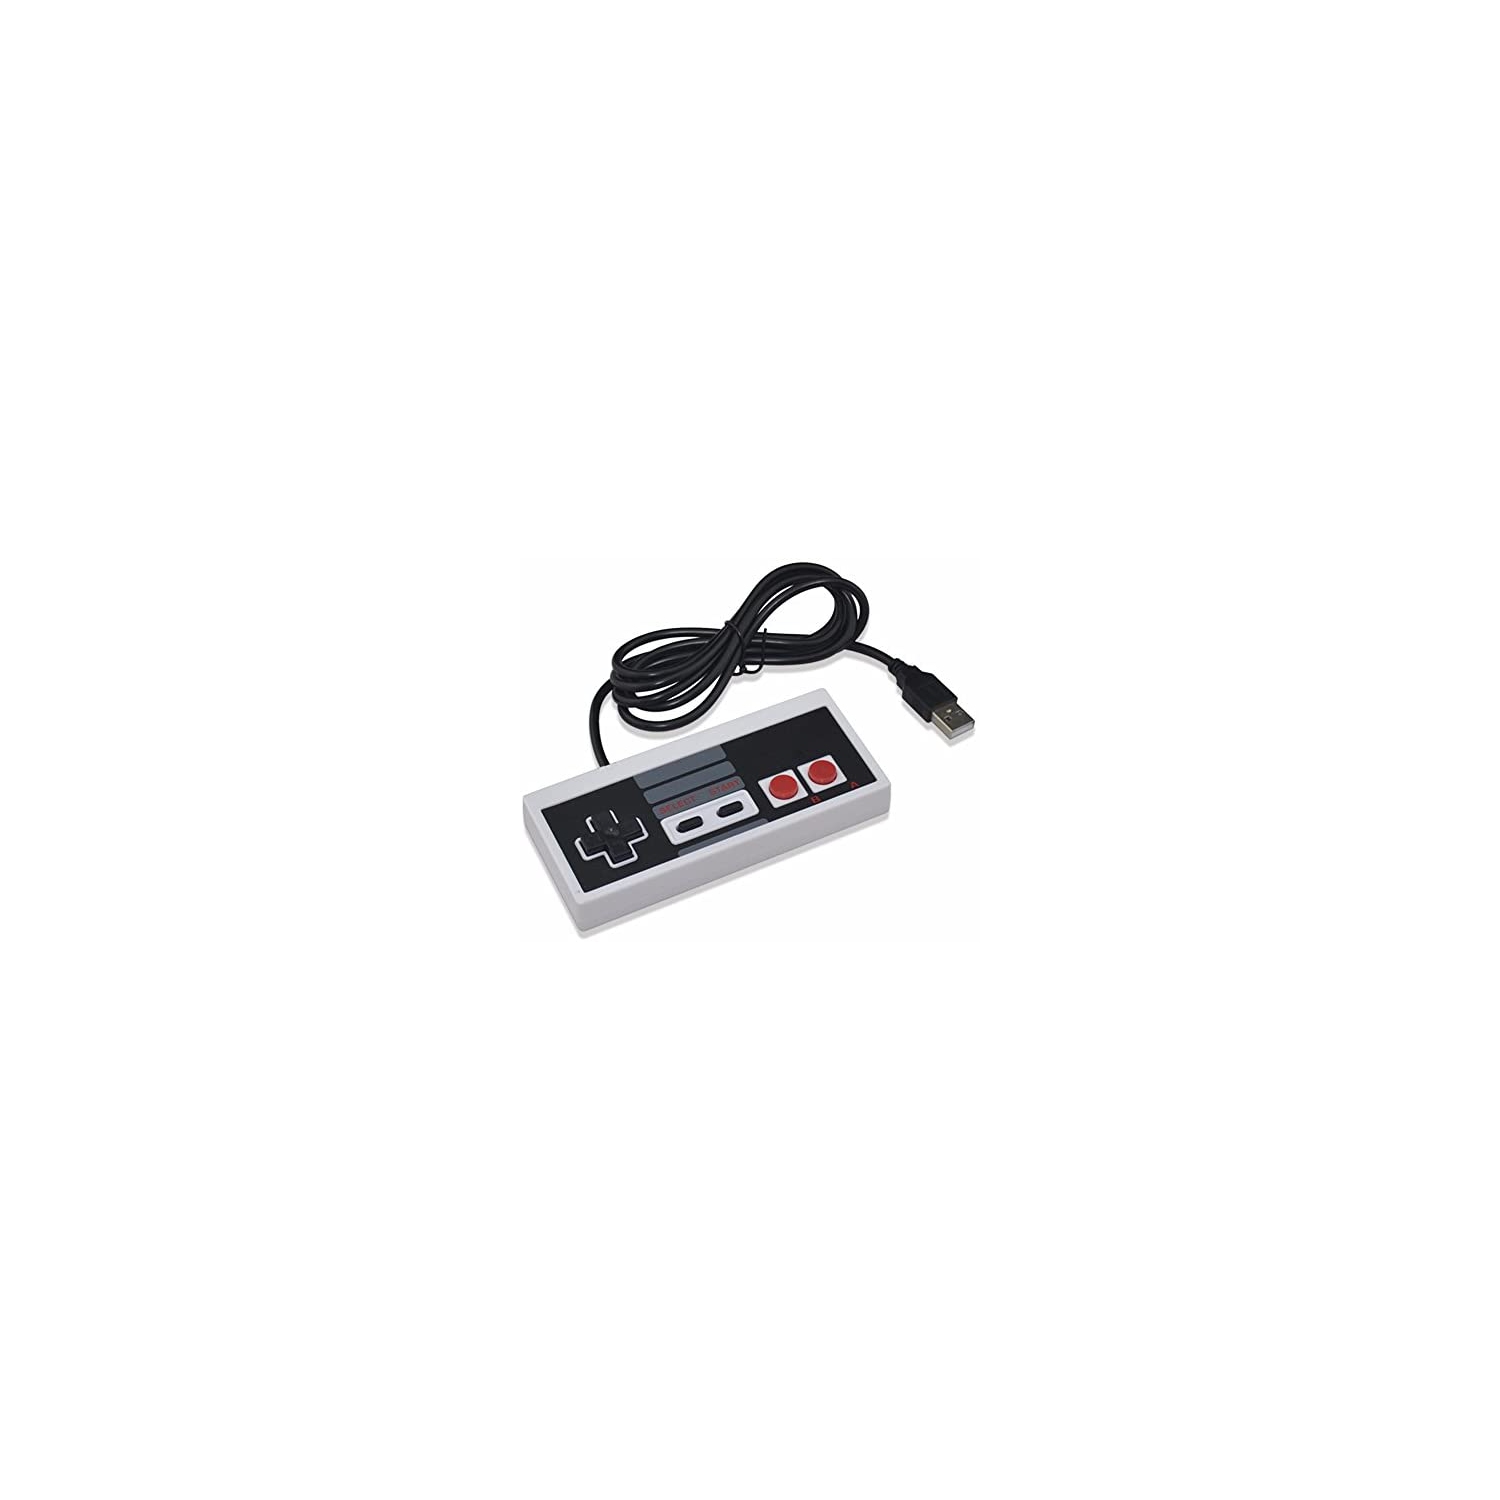 Classic USB NES Game Controllers USB Gamepad Joystick - Color White